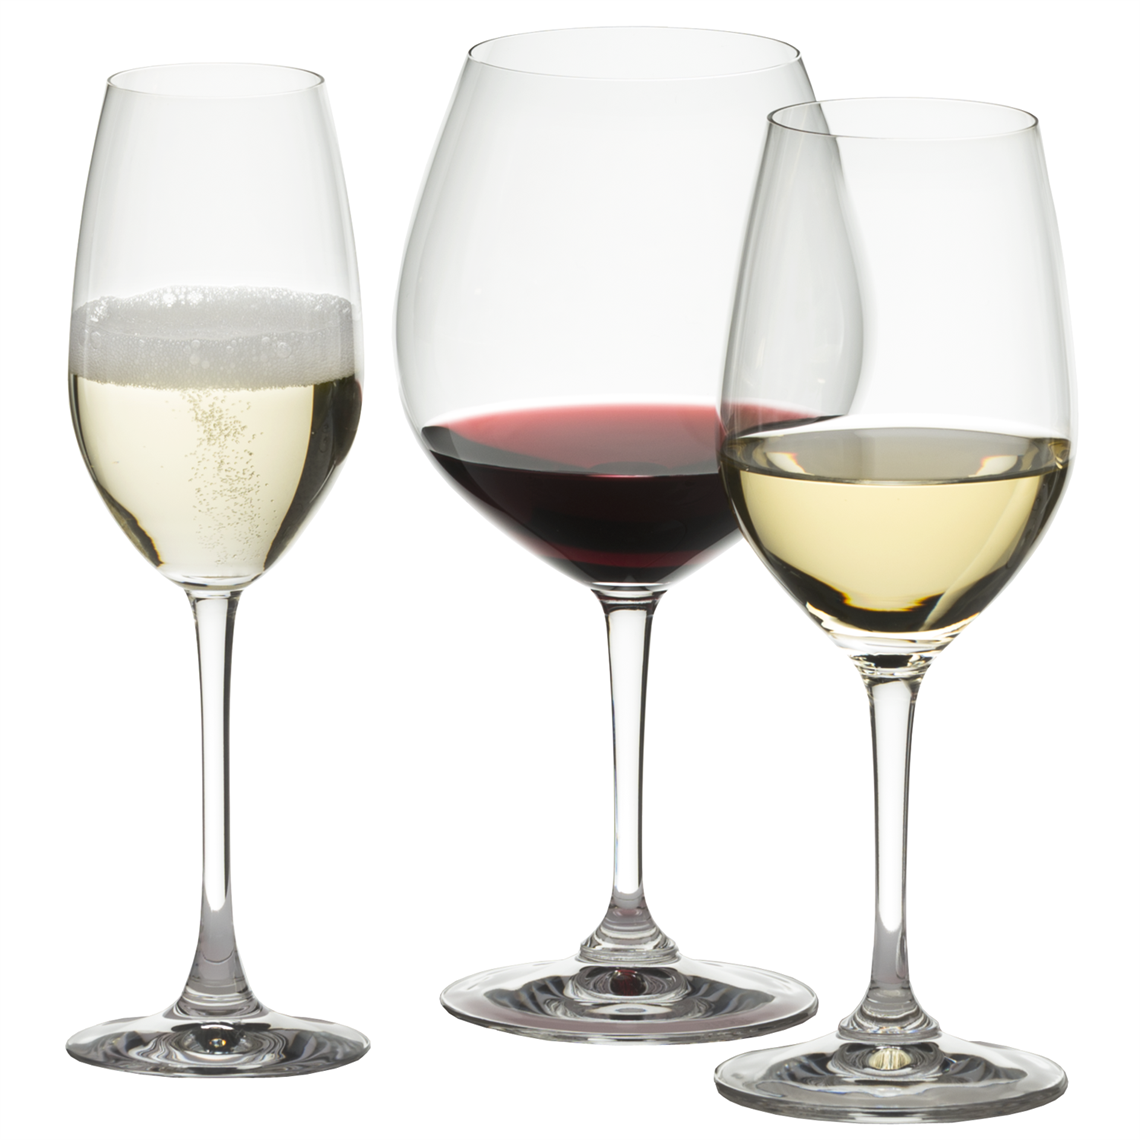 View more cabernet sauvignon wine glasses from our Restaurant & Trade Glasses range